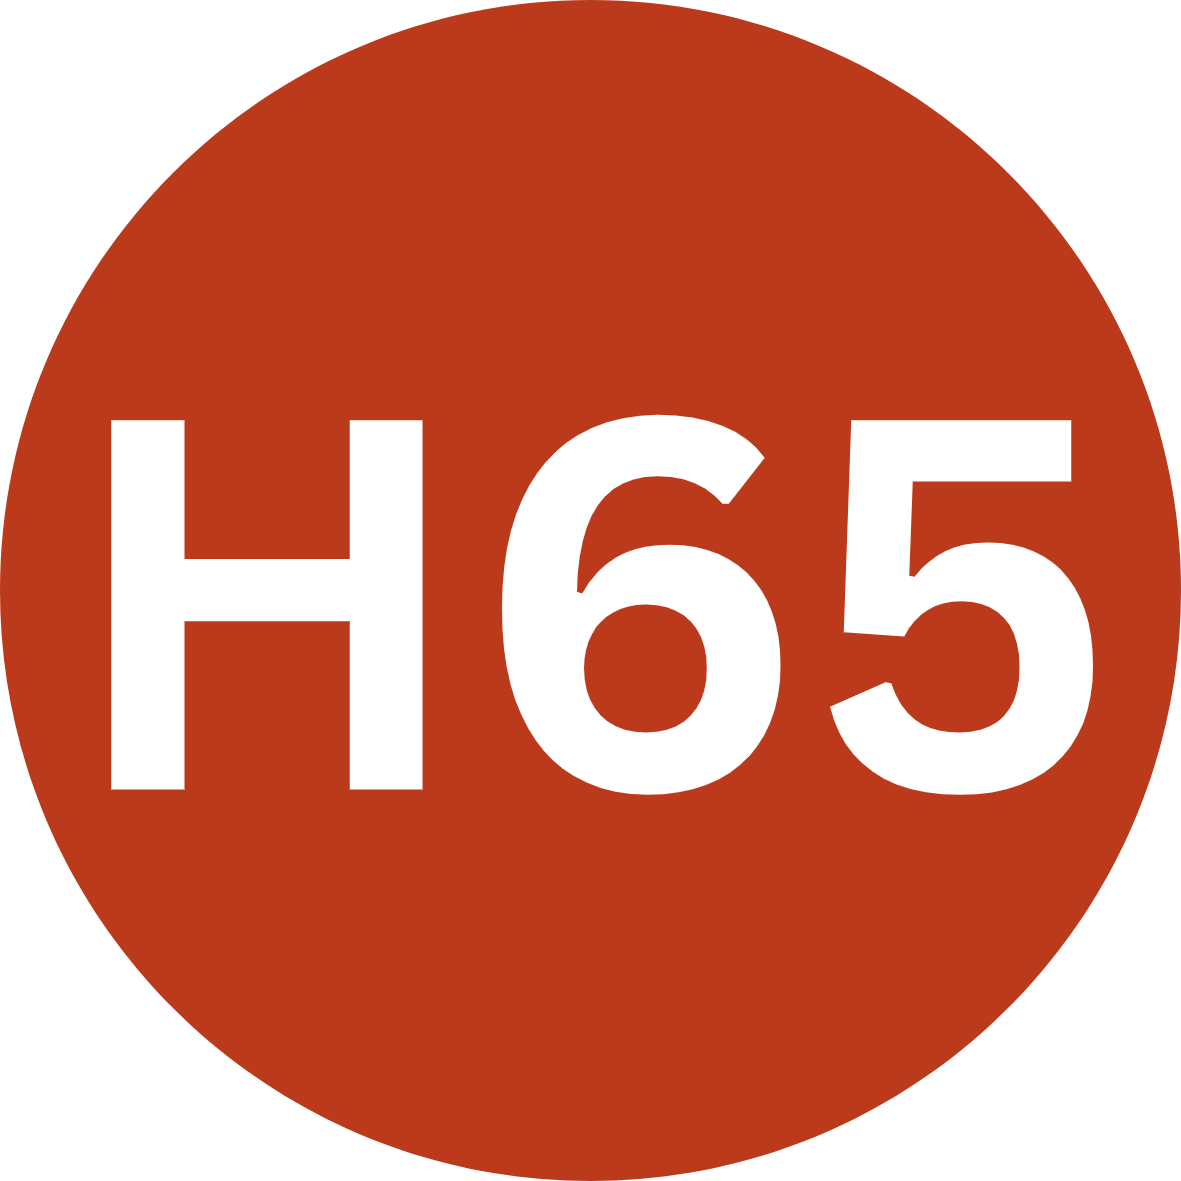 h65